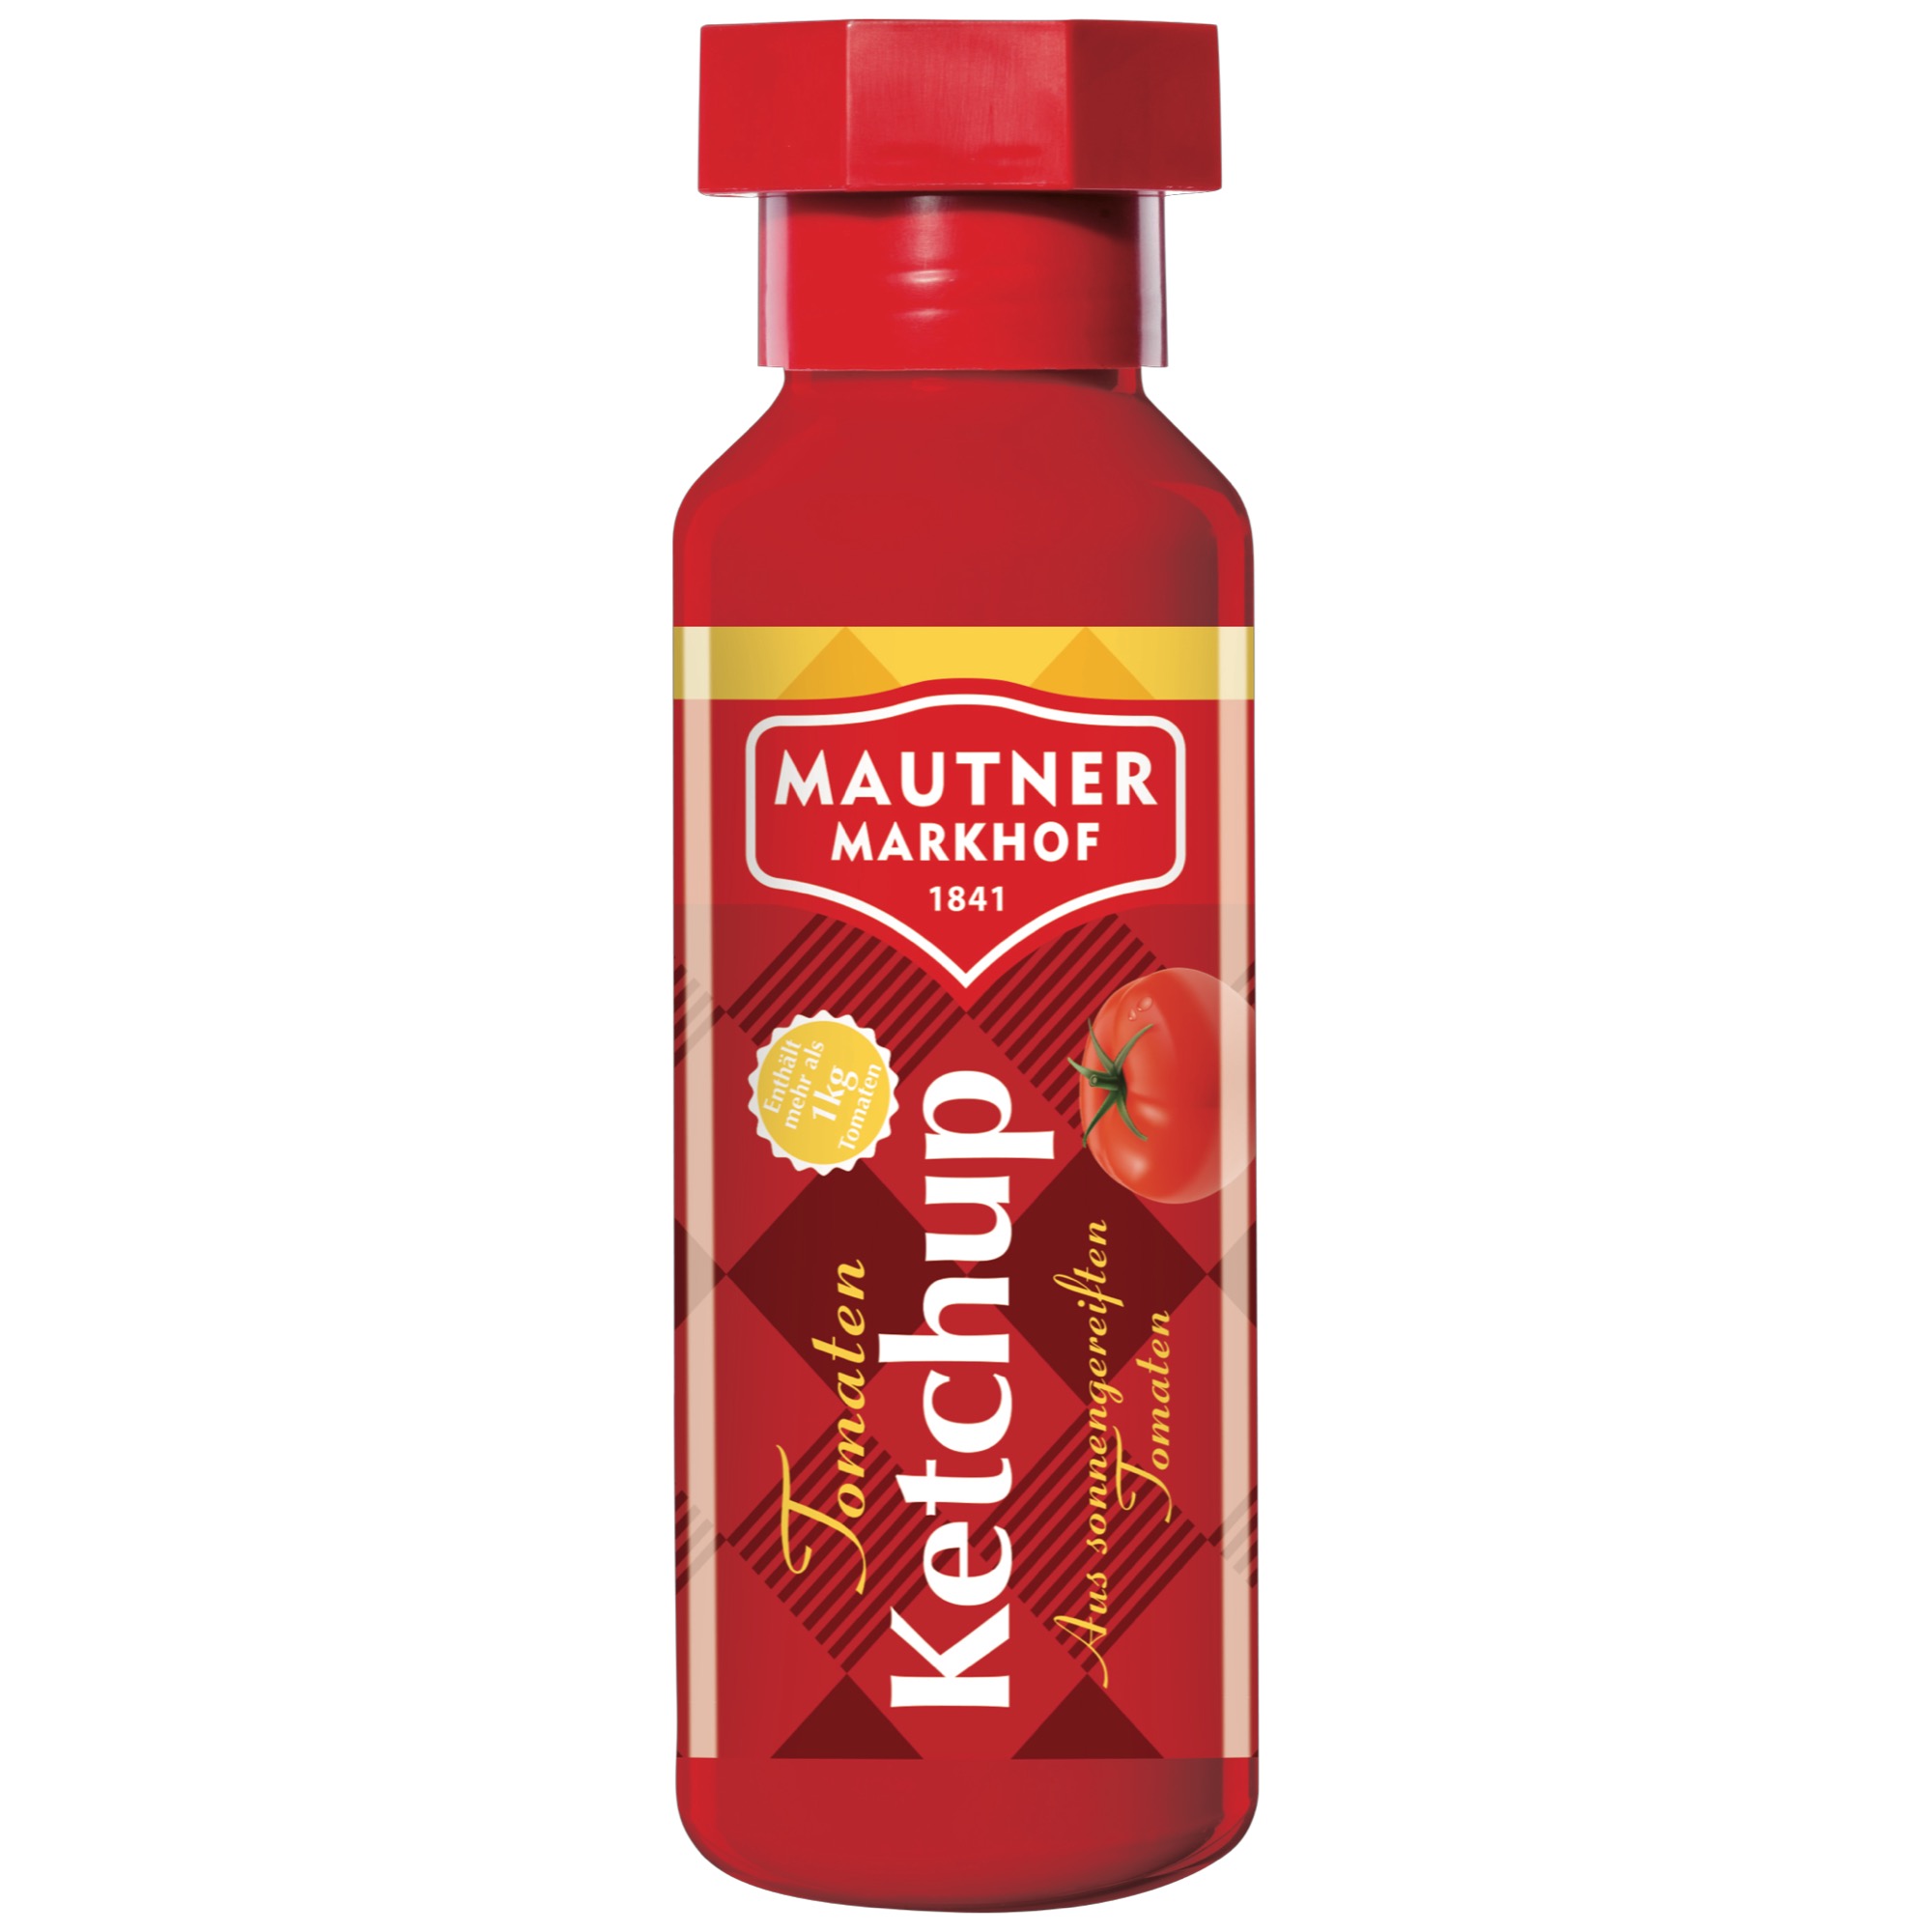 Mautner paradajkový kečup 520g